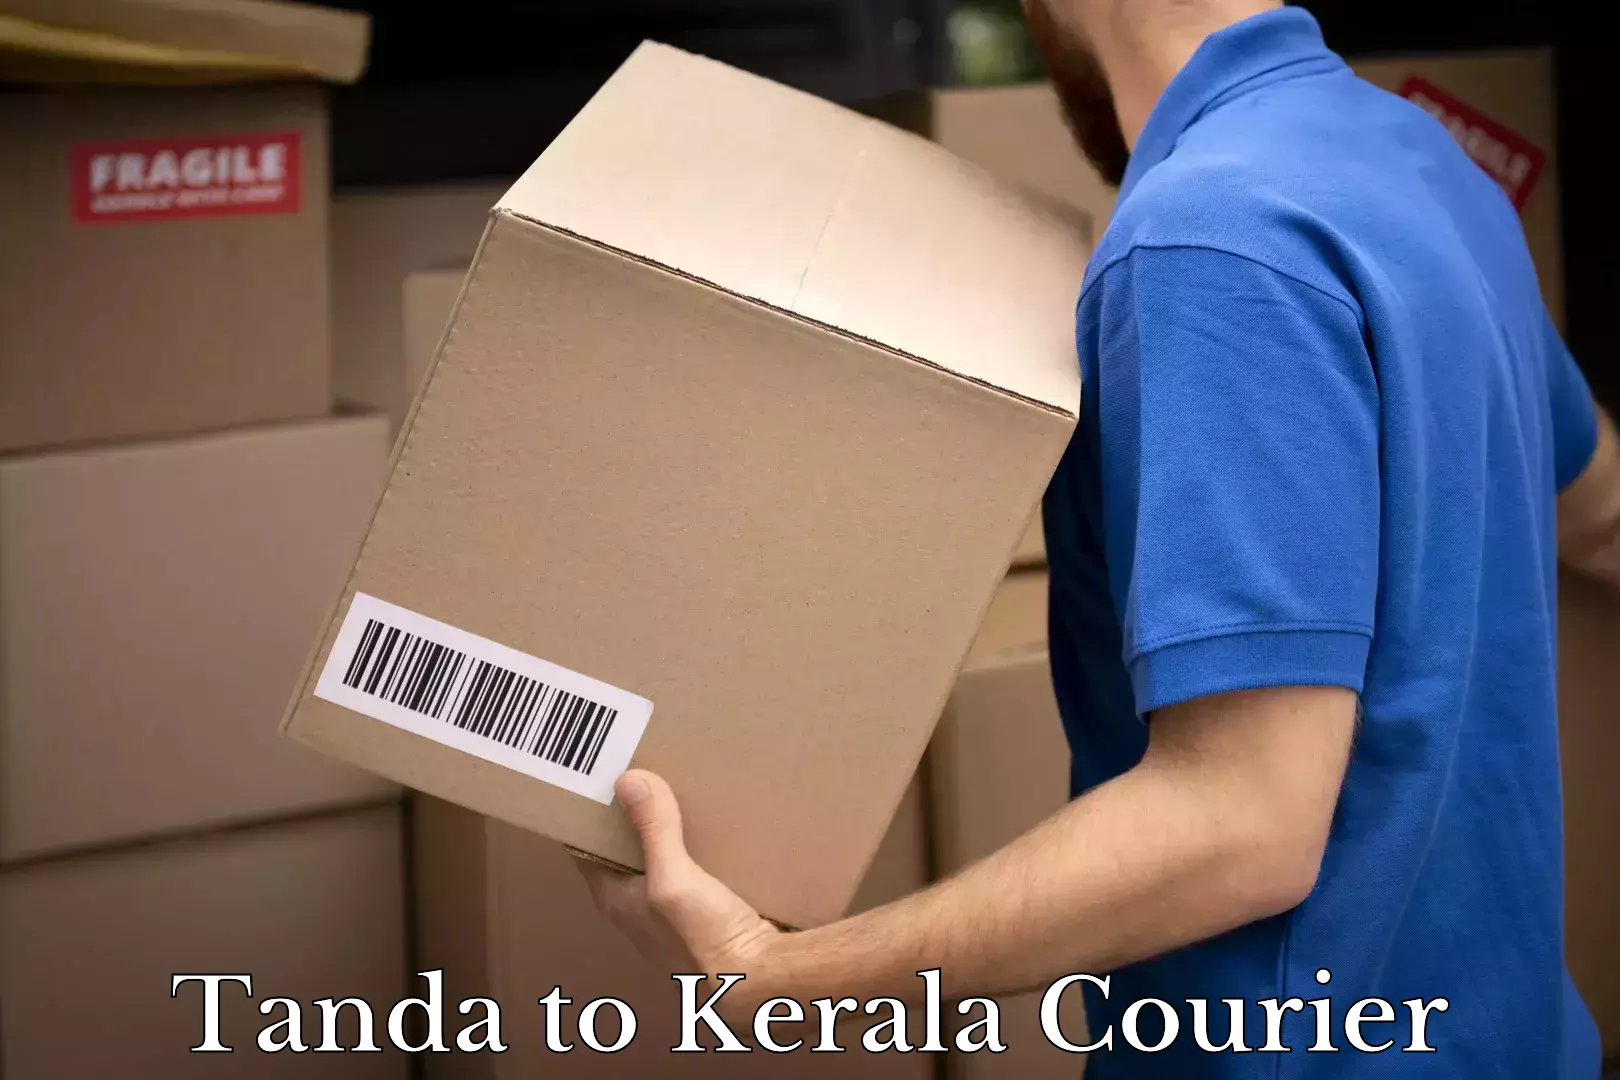 International courier networks Tanda to Kerala